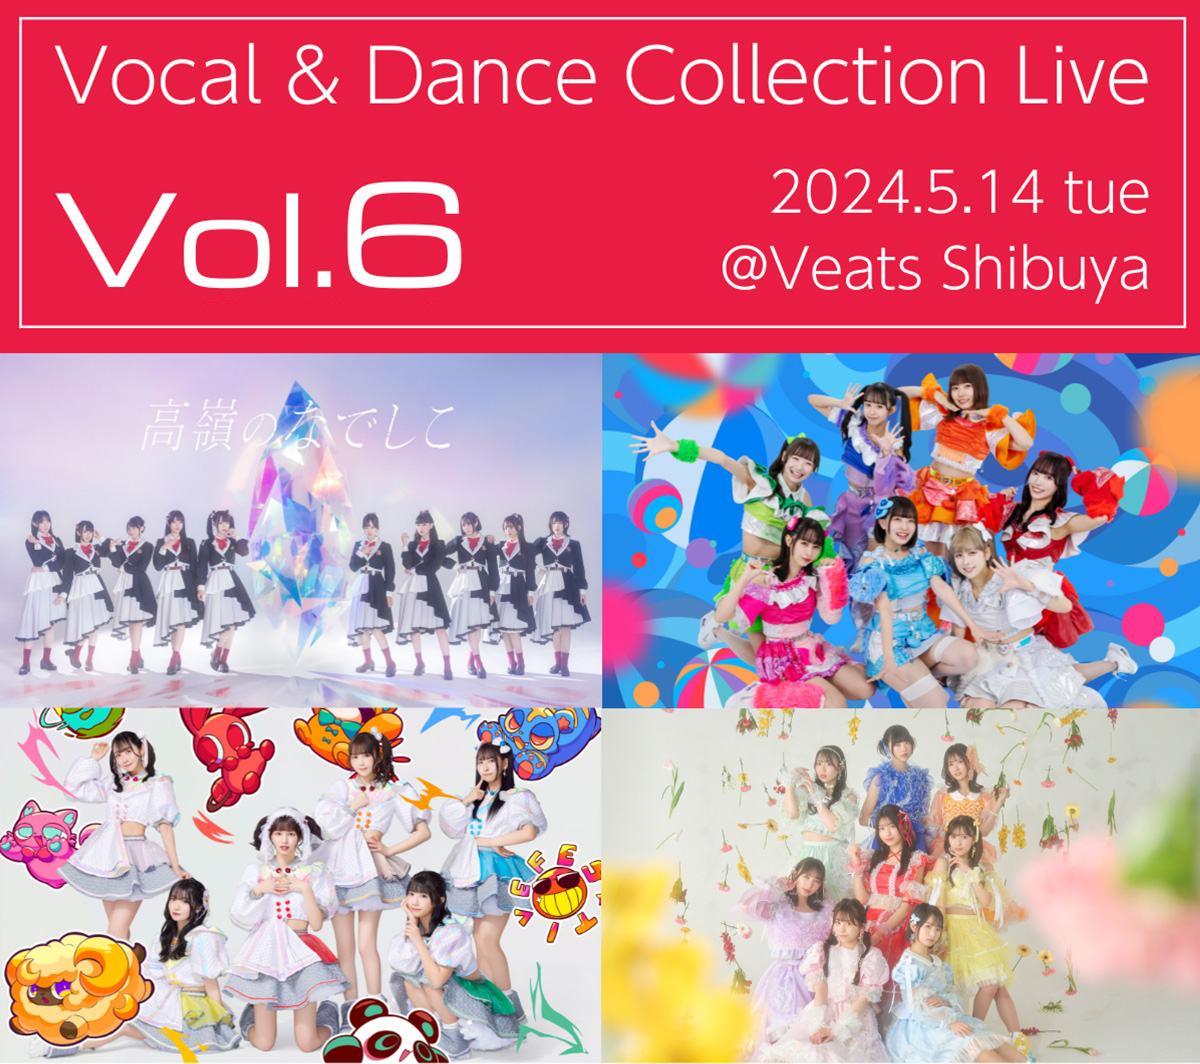 Vocal & Dance Collection Live Vol.6